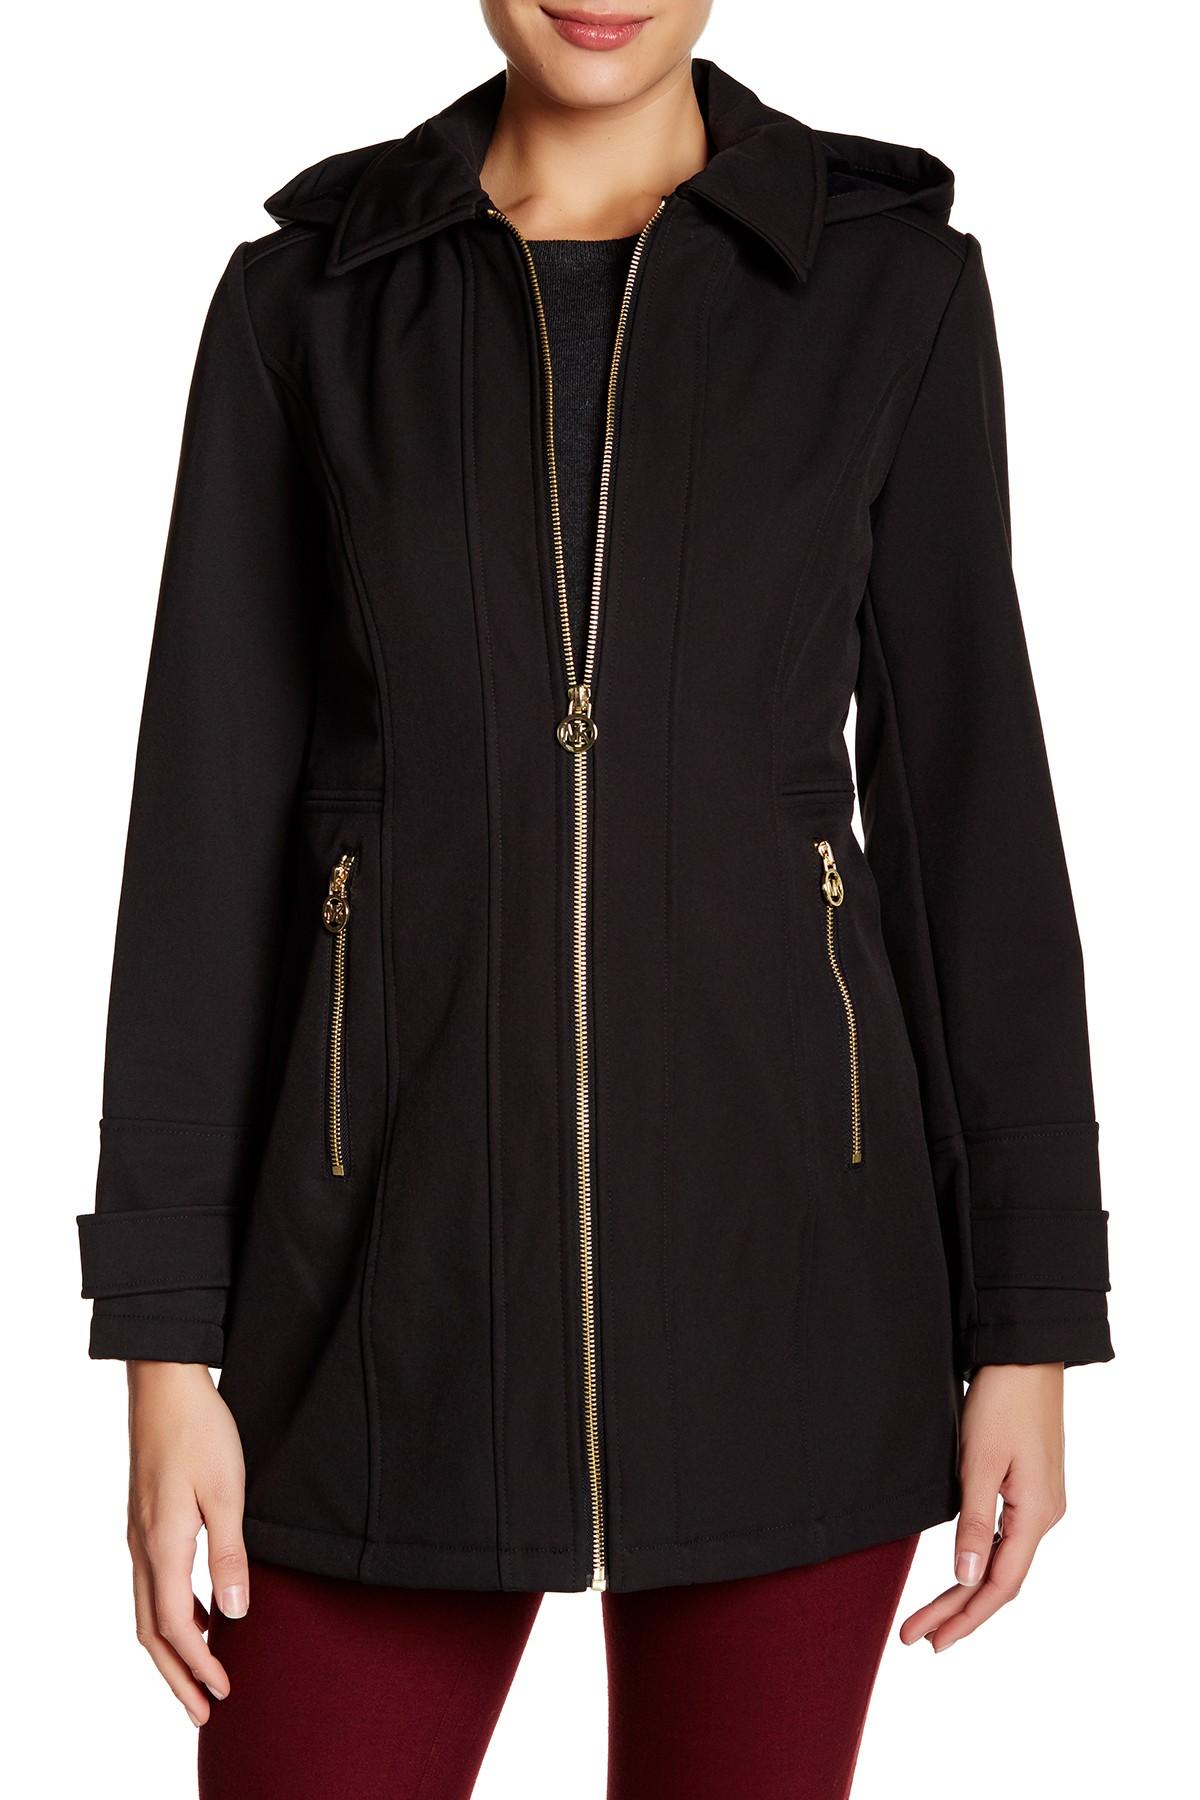 Michael Kors Missy Hooded Rain Coat in Black | Lyst